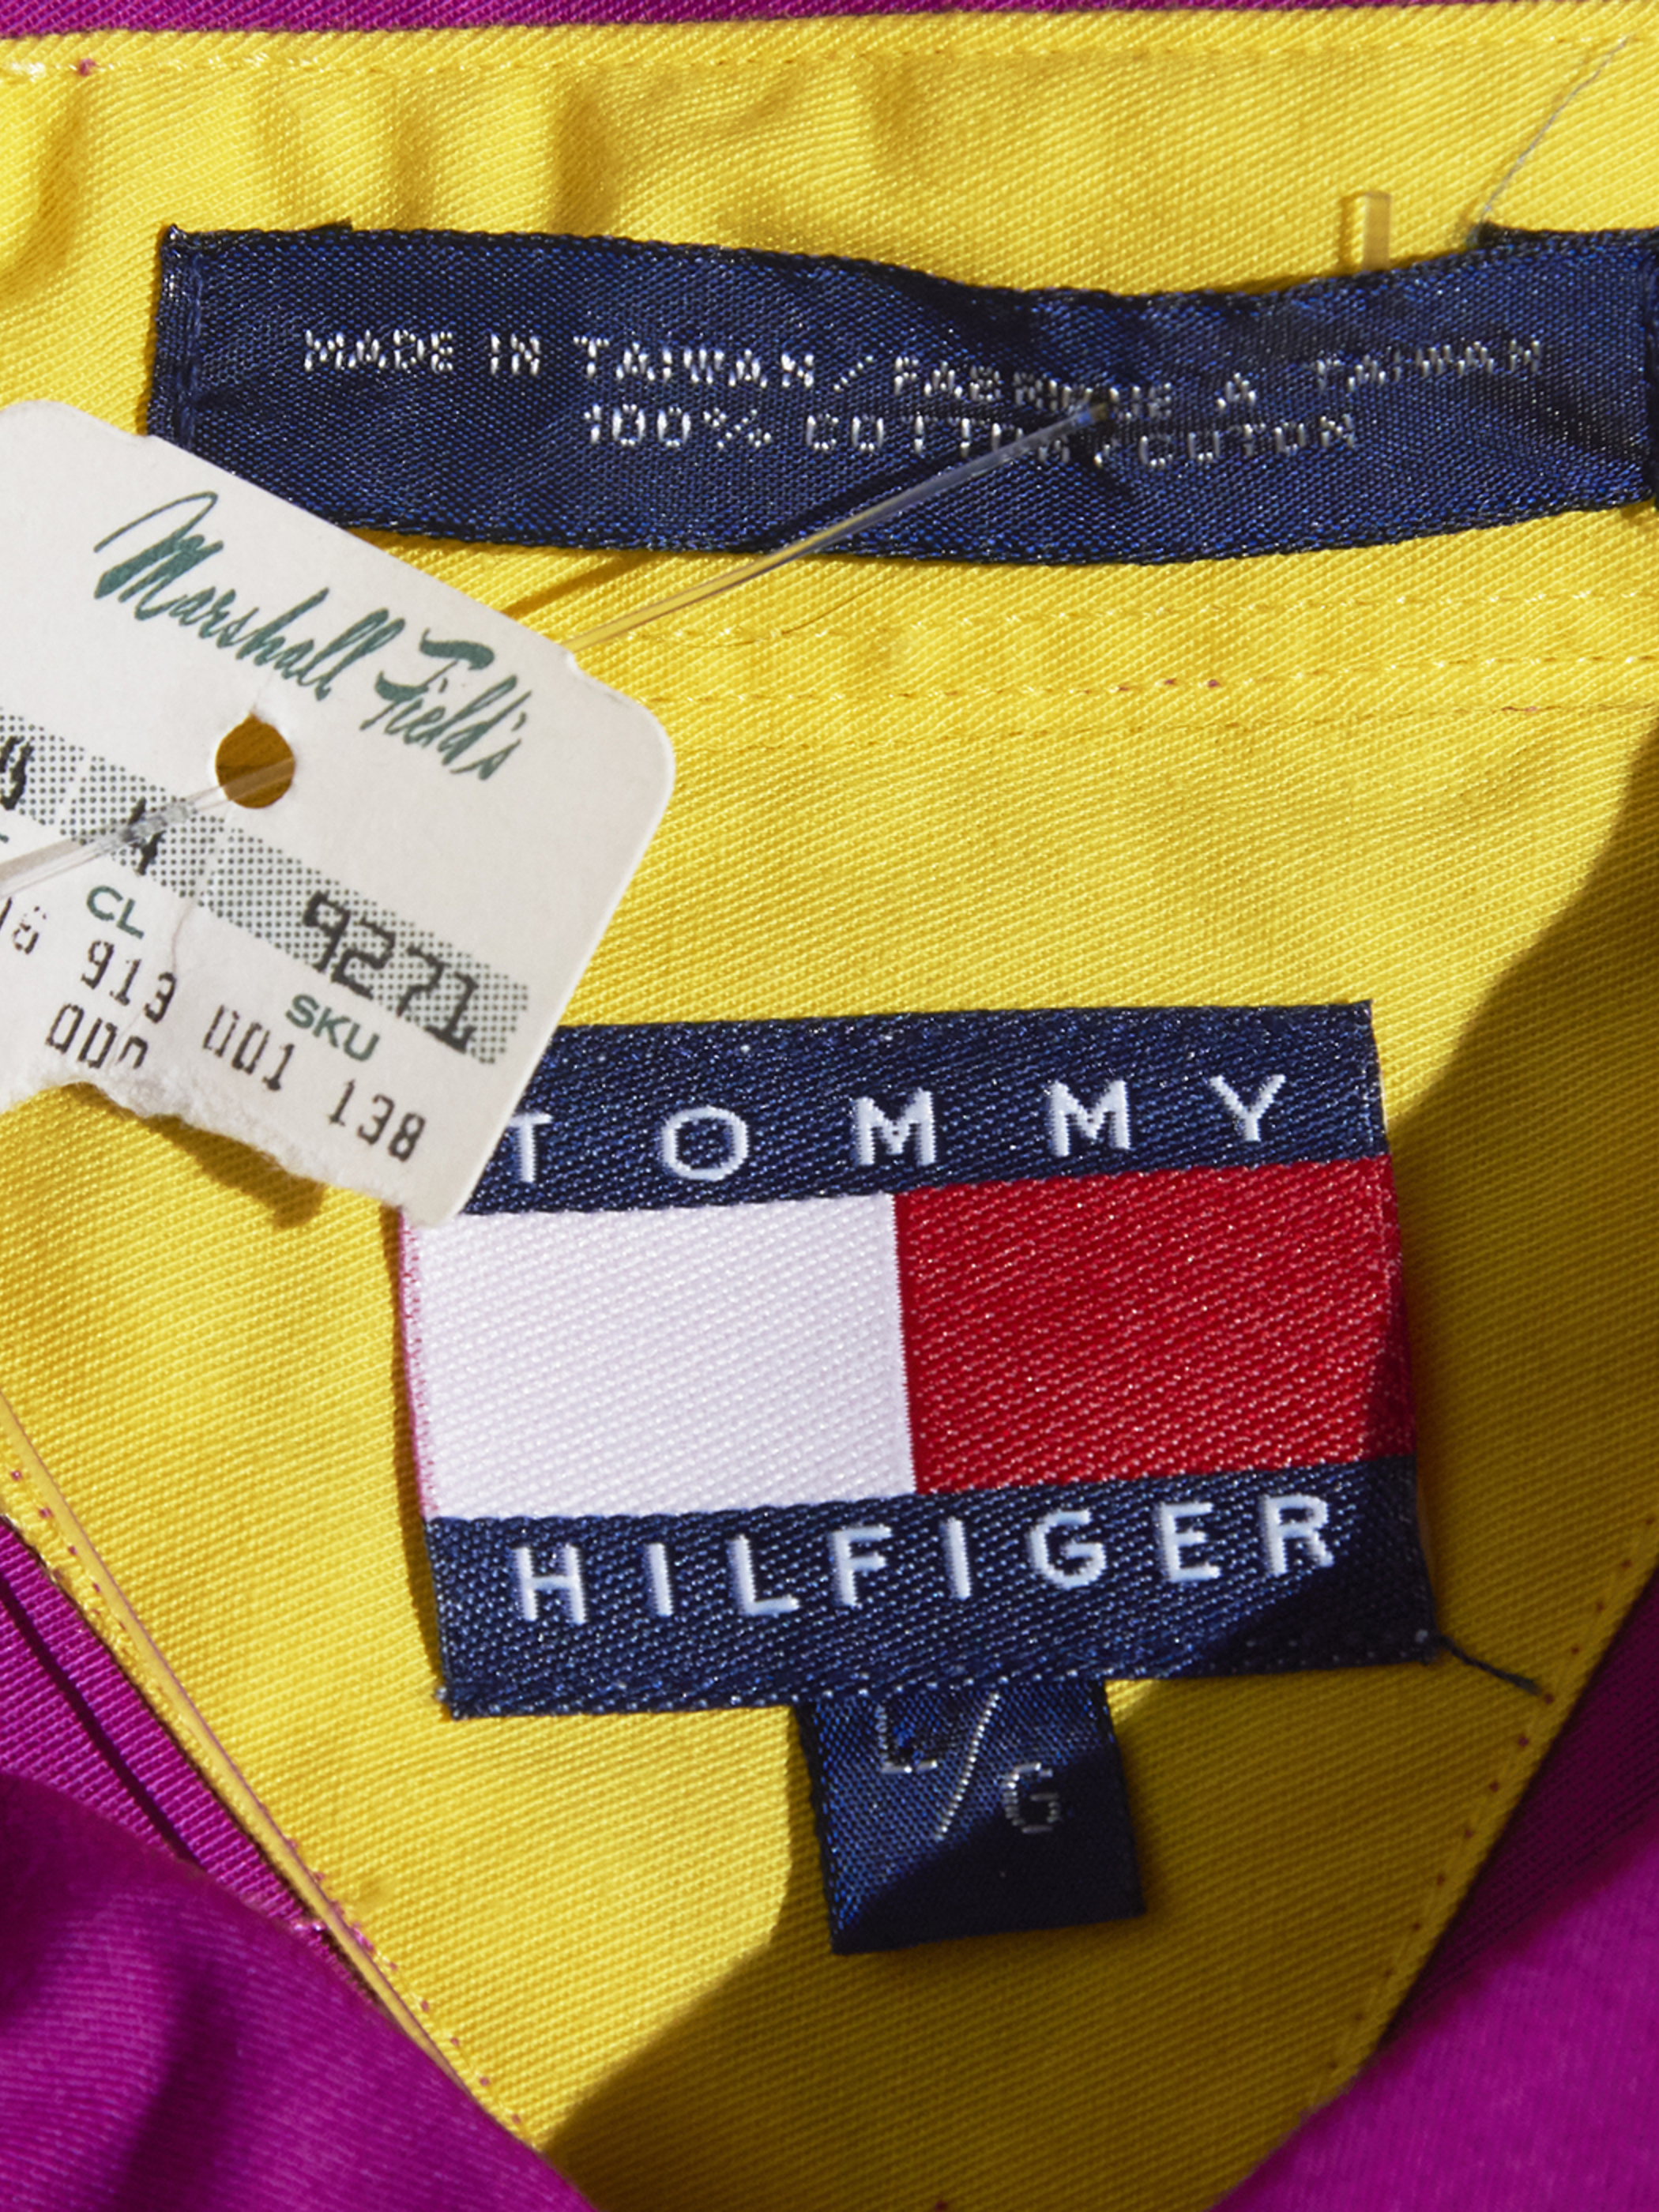 NOS 1990s "TOMMY HILFIGER" crazy stripe B.D. shirt -CRAZY-